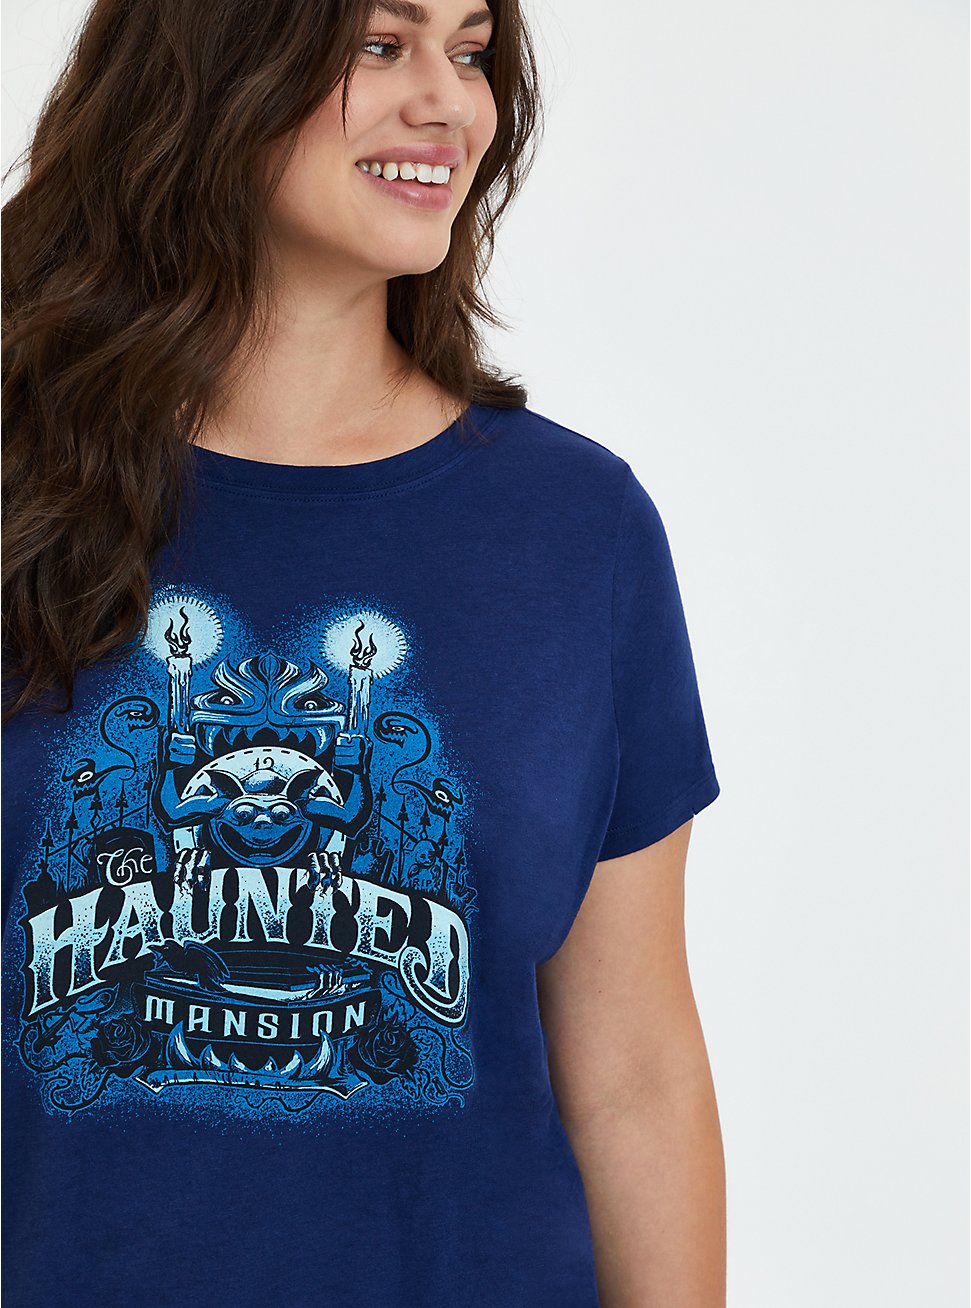 Disney Haunted Mansion Distressed Tee - Blue, MEDIEVAL BLUE, hi-res